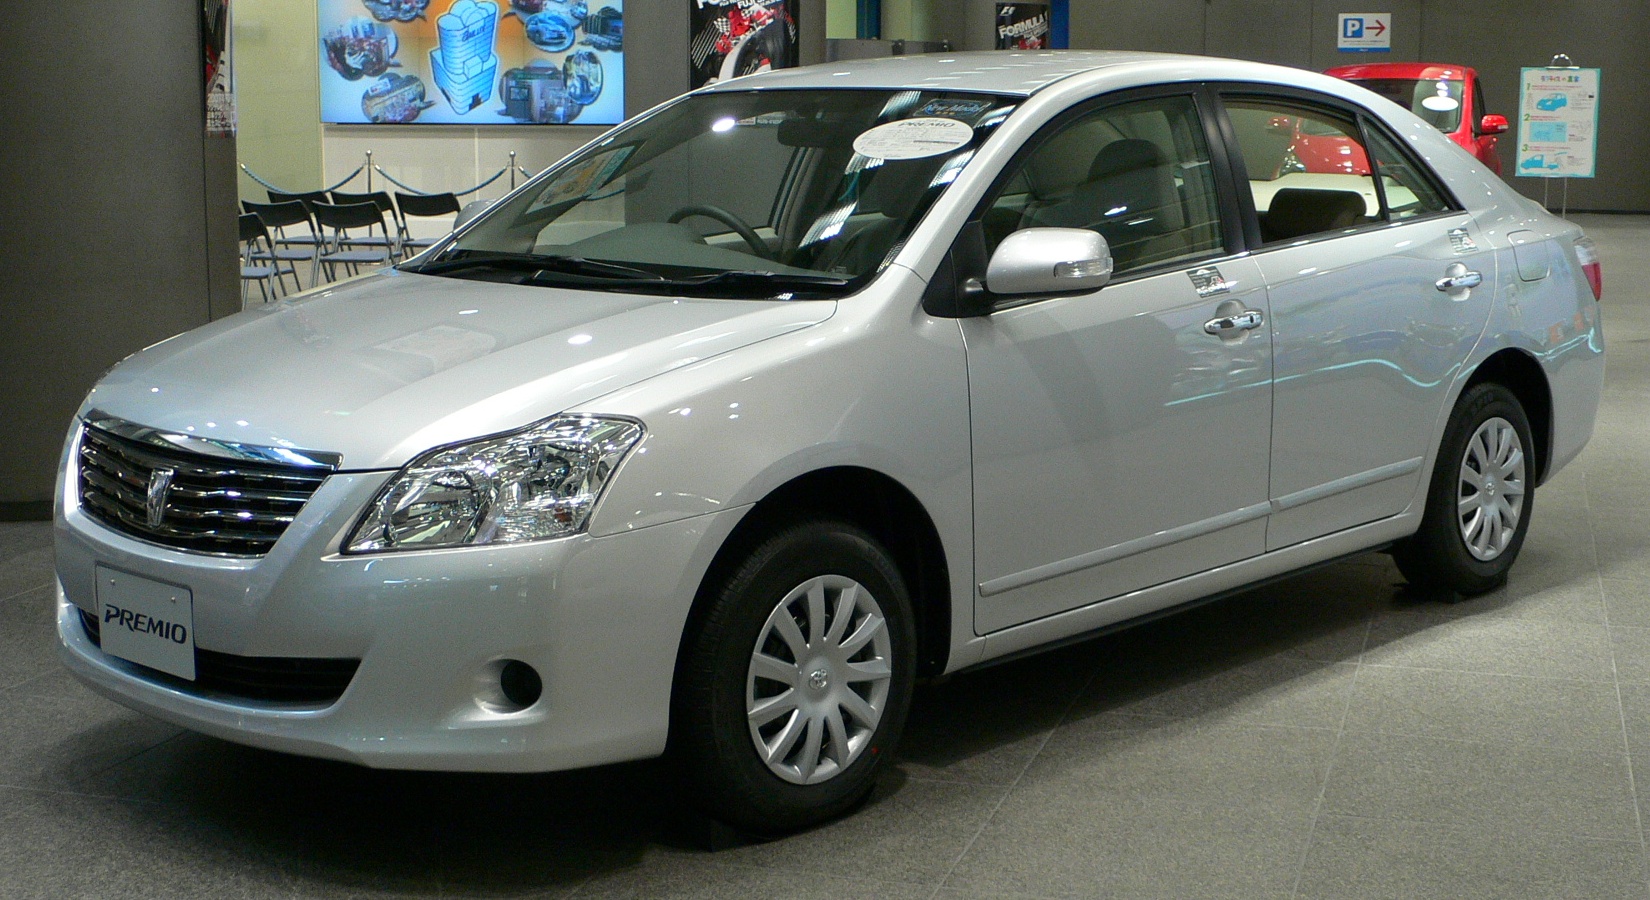 Toyota premio 2007 model in pakistan